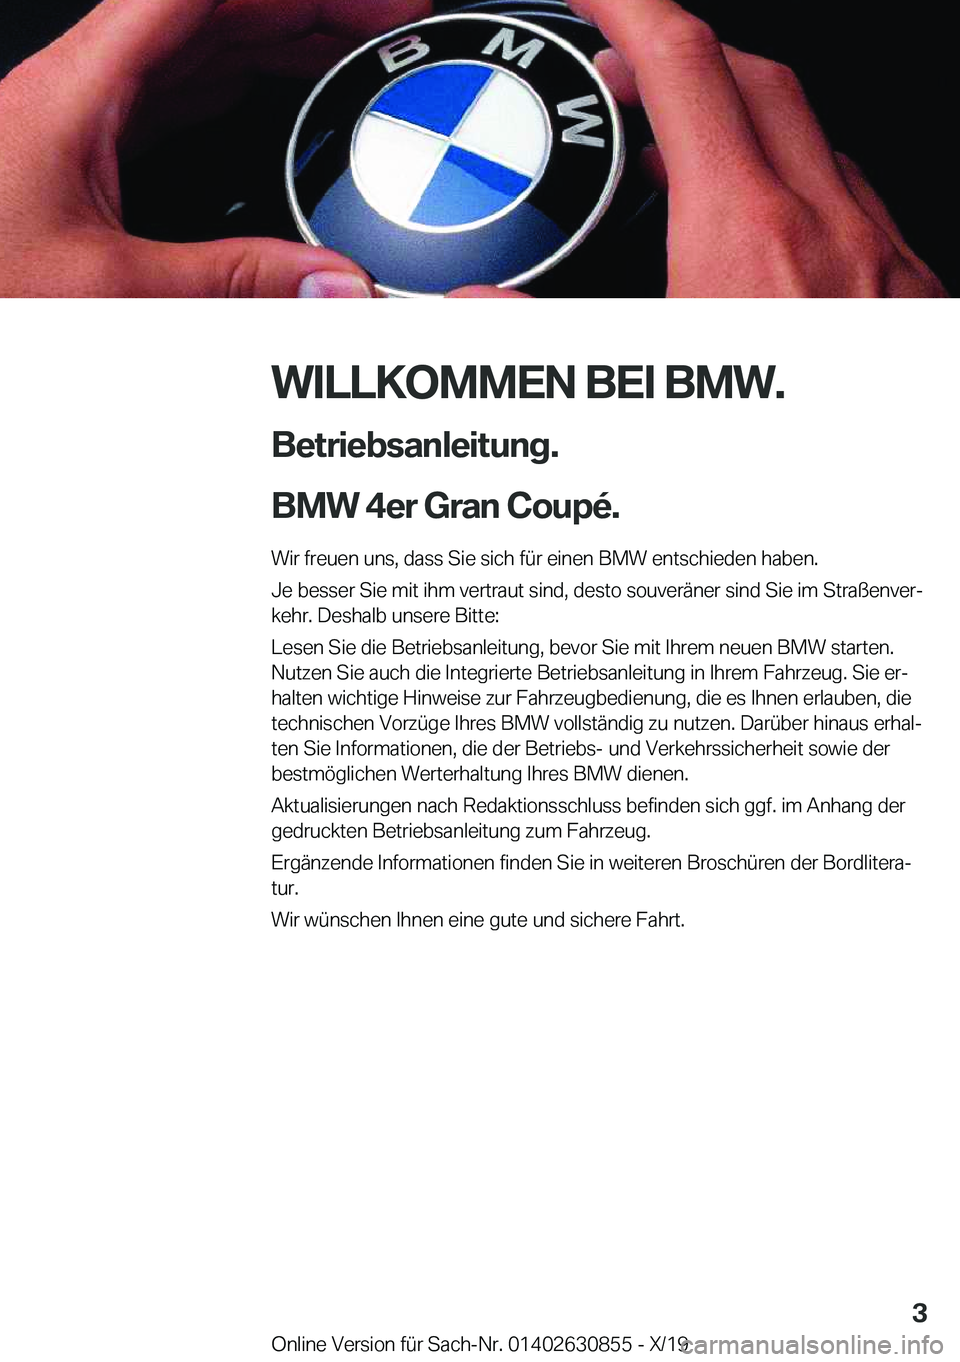 BMW 4 SERIES GRAN COUPE 2020  Betriebsanleitungen (in German) �W�I�L�L�K�O�M�M�E�N��B�E�I��B�M�W�.�B�e�t�r�i�e�b�s�a�n�l�e�i�t�u�n�g�.
�B�M�W��4�e�r��G�r�a�n��C�o�u�p�